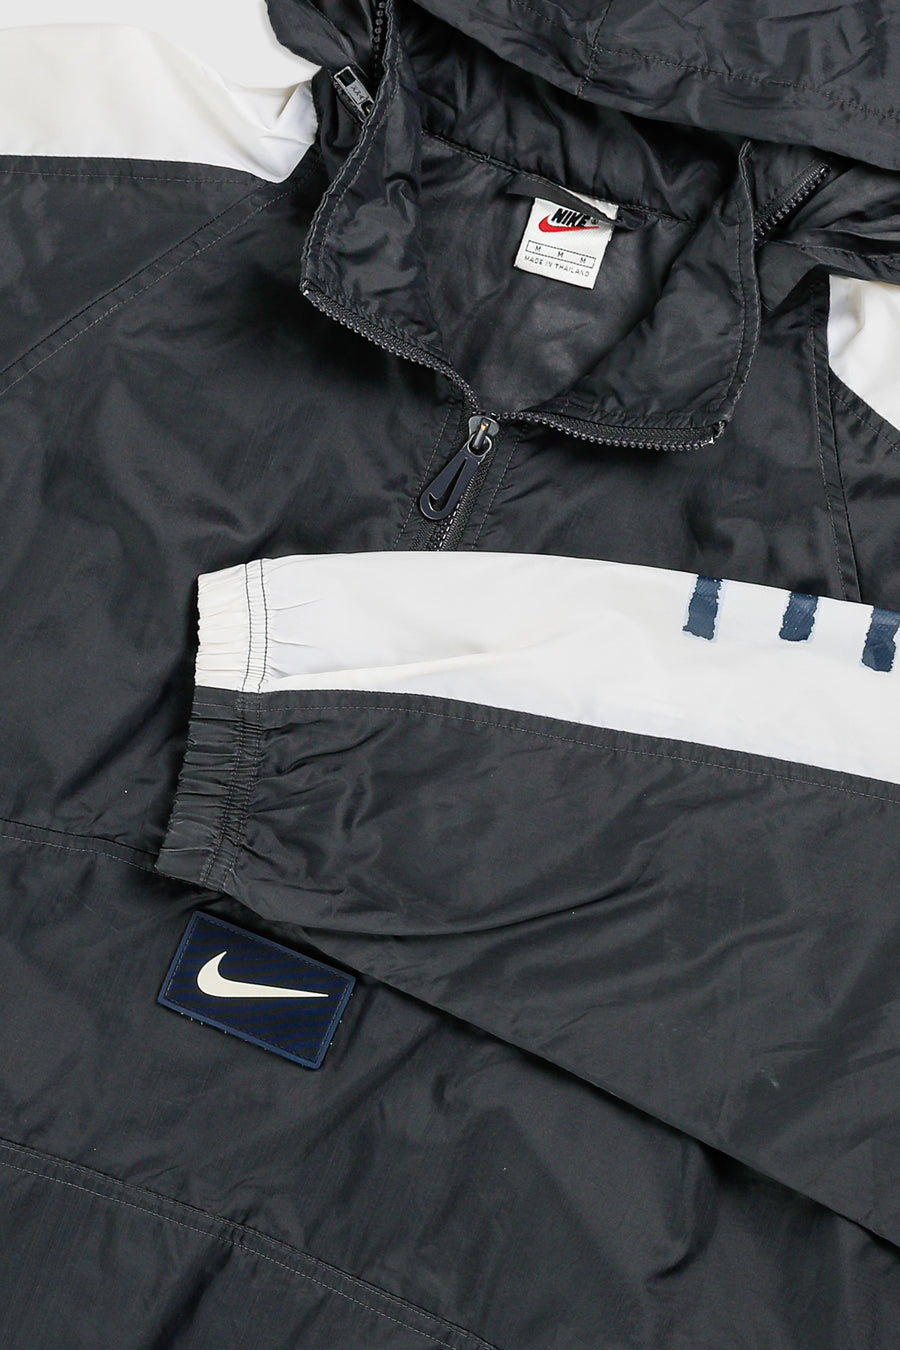 Vintage Nike Pullover Windbreaker Jacket - M